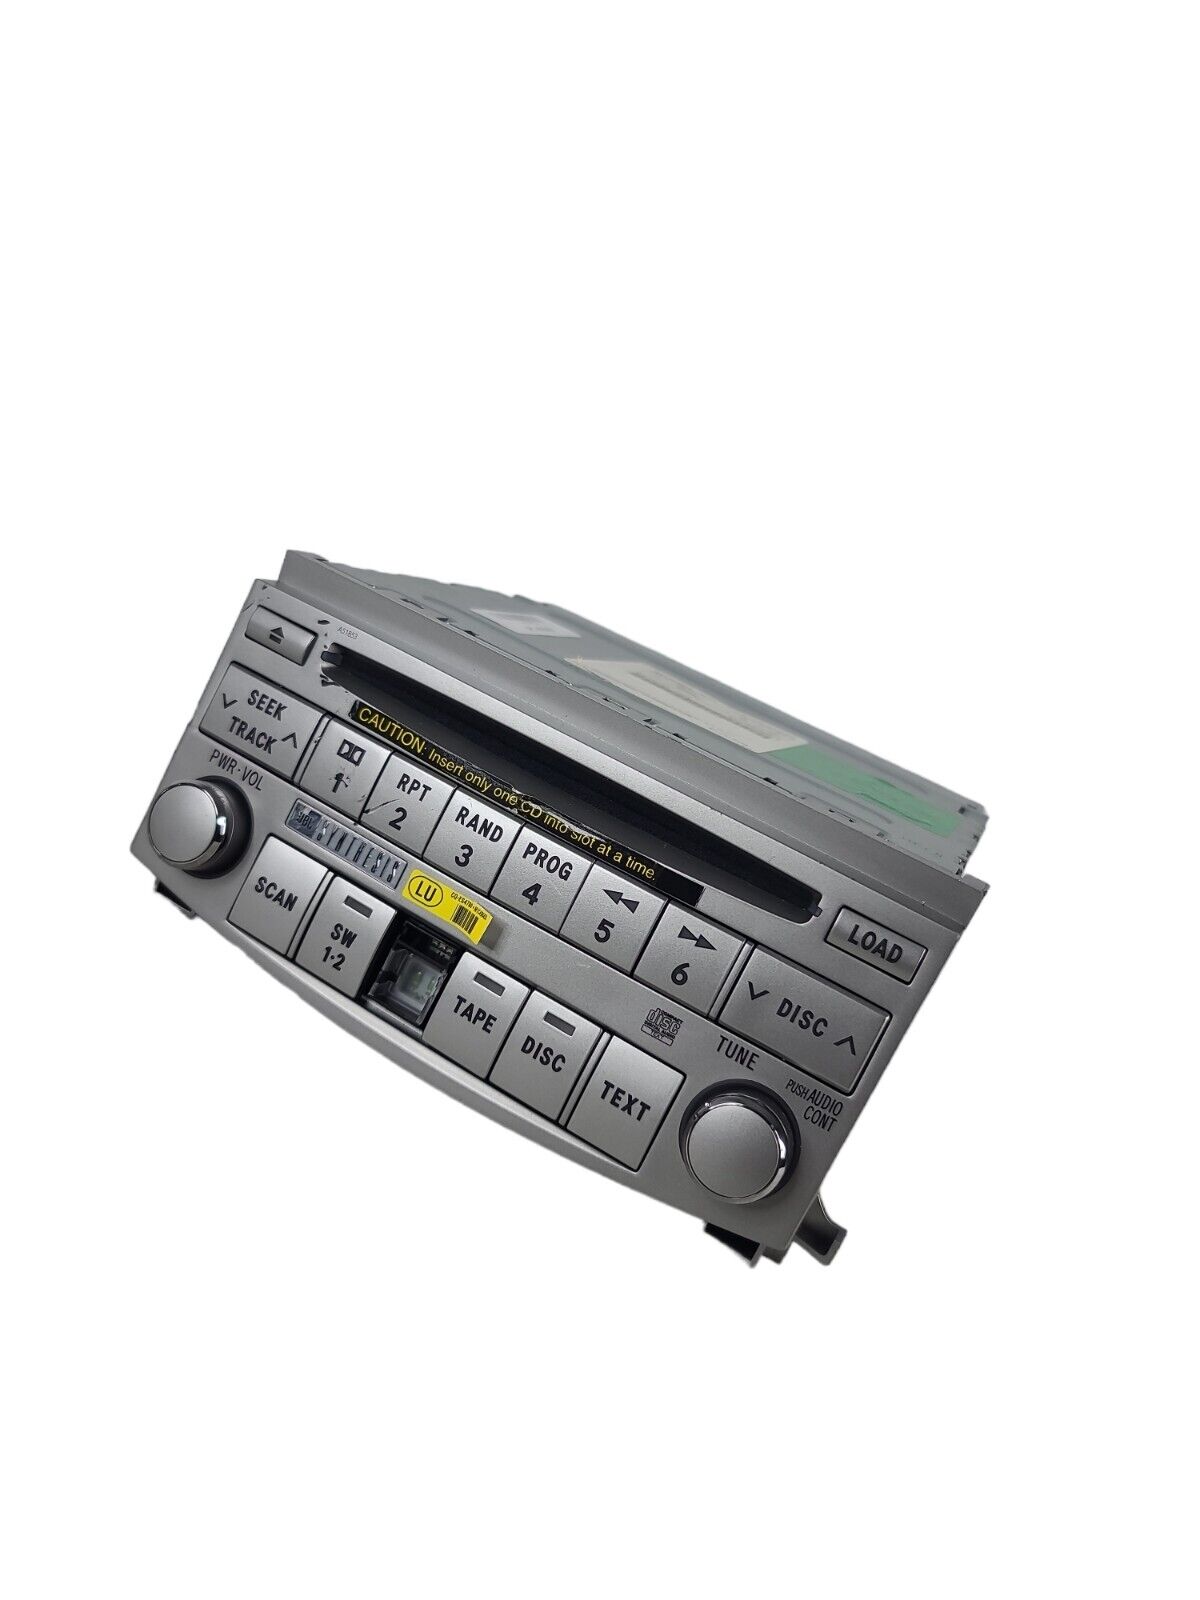 2006 TOYOTA Avalon JBL AM FM Radio Stereo 6 Disc Changer CD Player